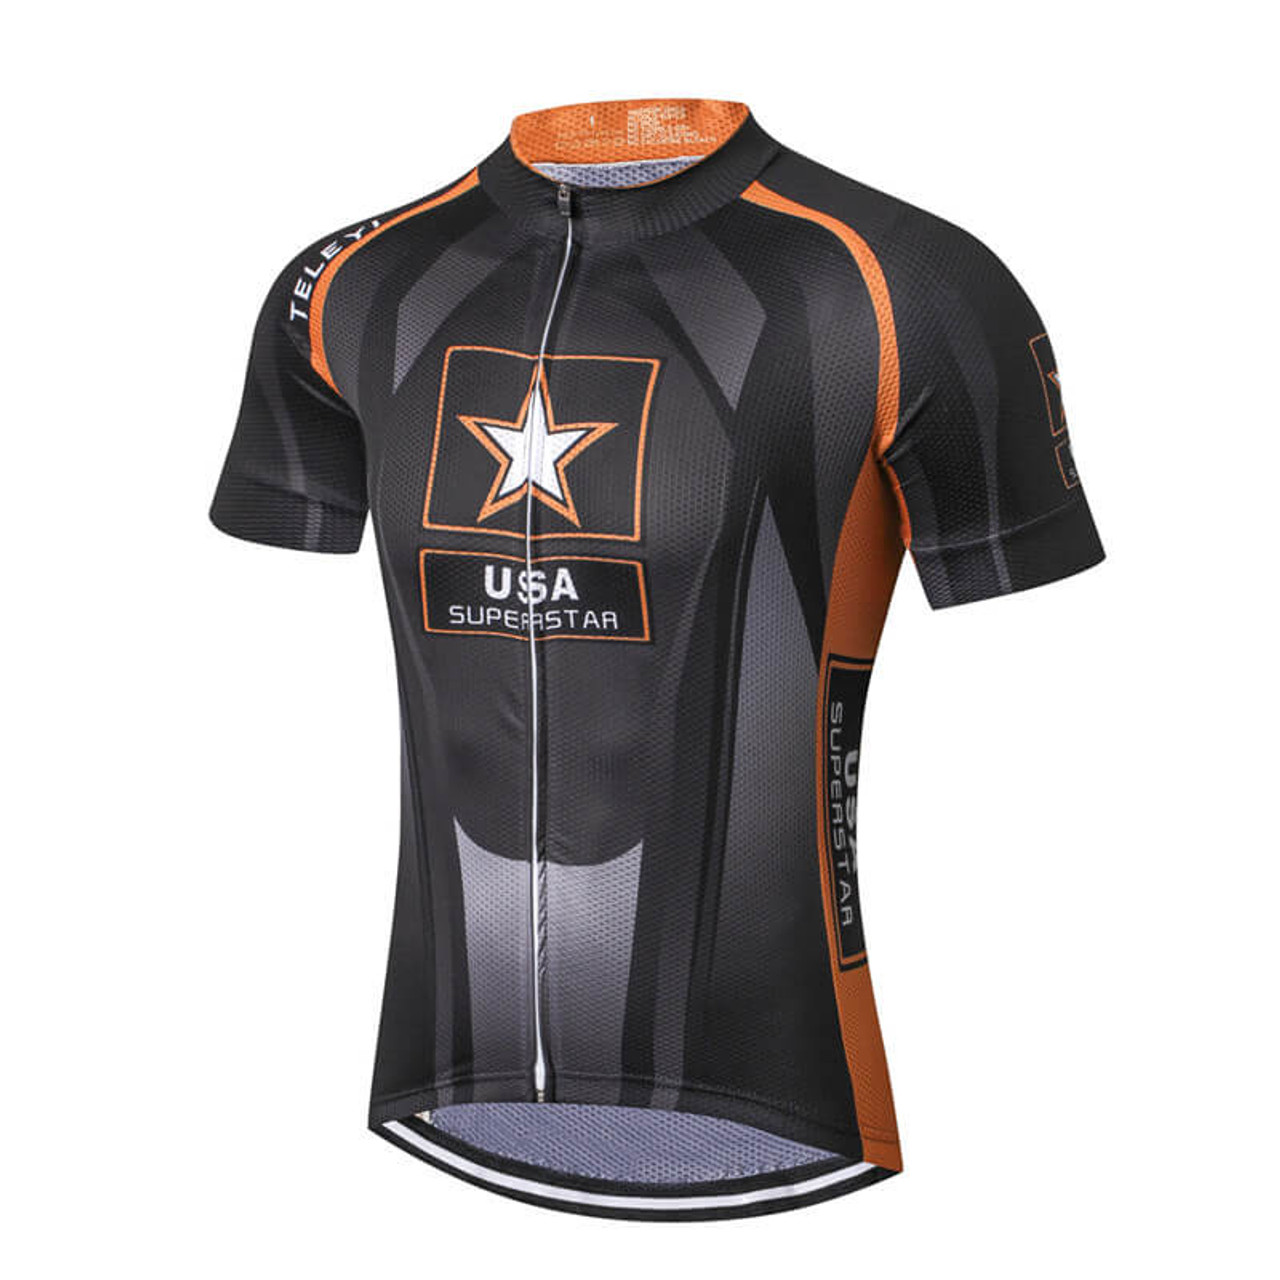 USA Army Superstar Cycling Jersey | Freestylecycling.com